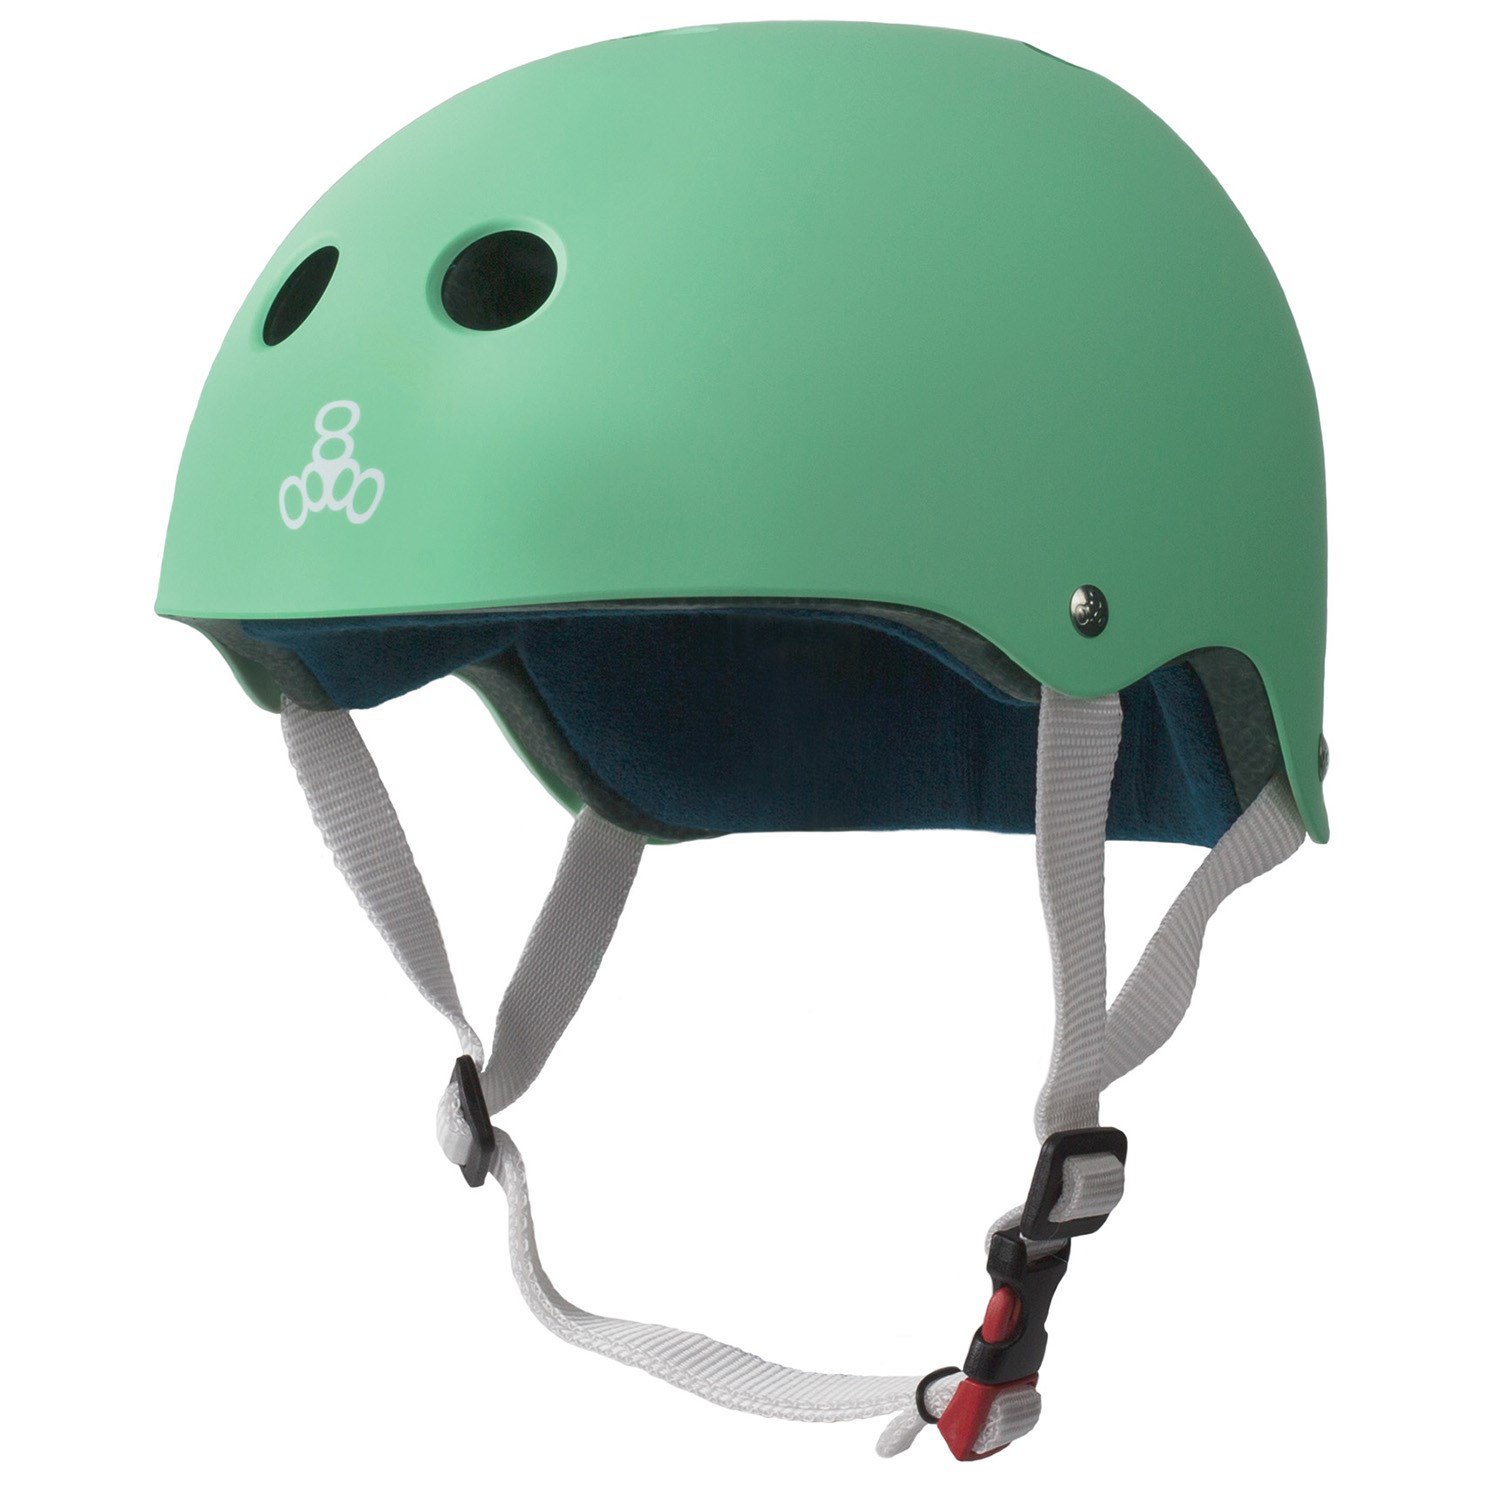 Details about   New Triple 8 Hardened Skate Helmet Sweatsaver Liner Replacement for Model SK 564 